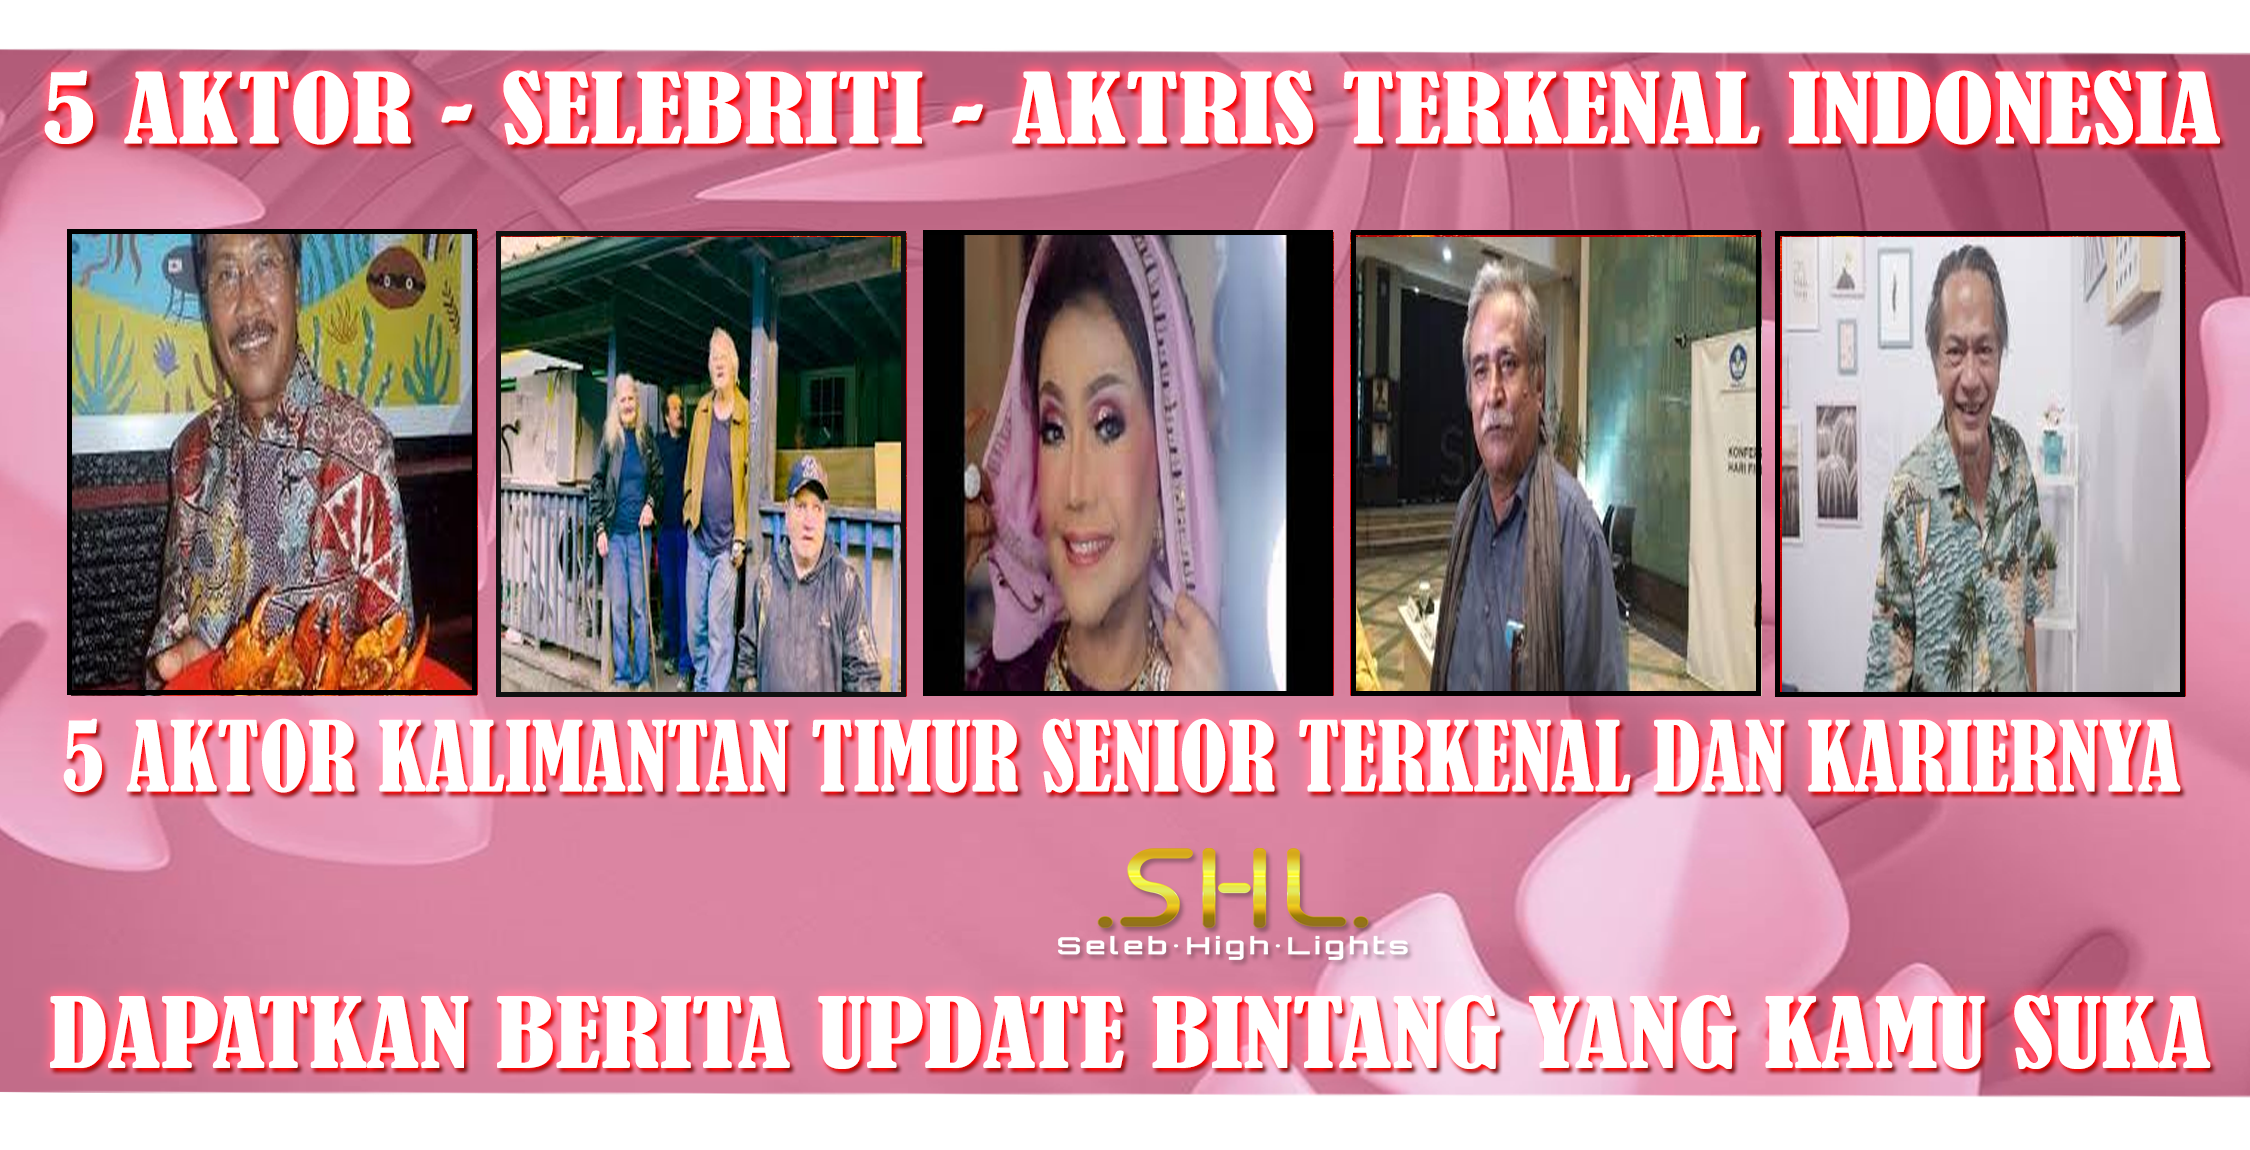 5 Aktor Kalimantan Timur